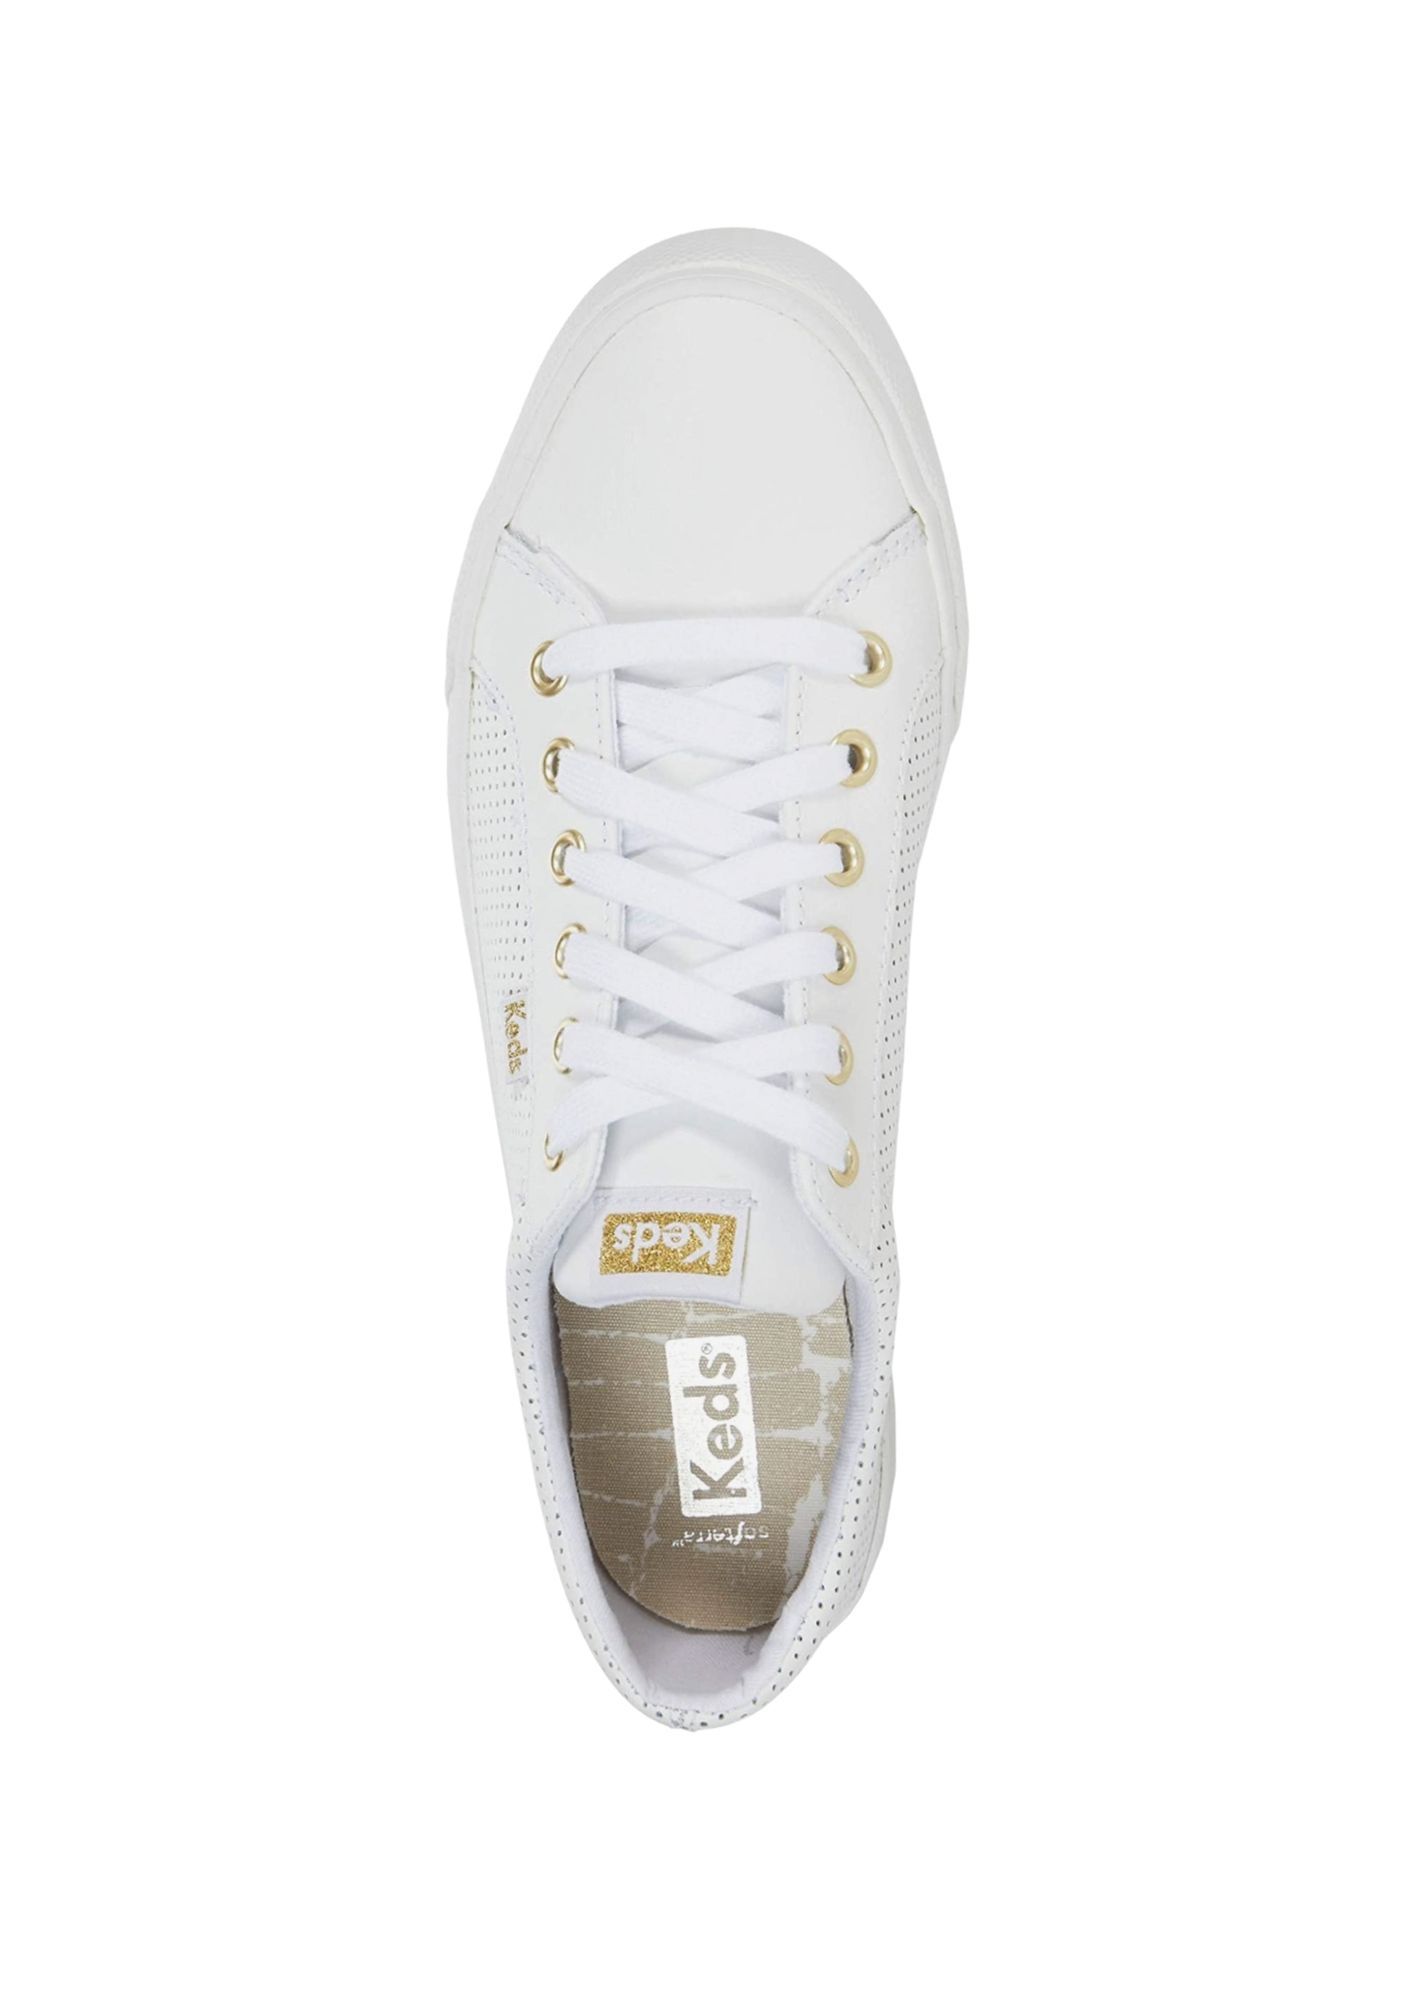 Keds Jump Kick Gold Accent Sneaker - FINAL SALE Shoes Keds